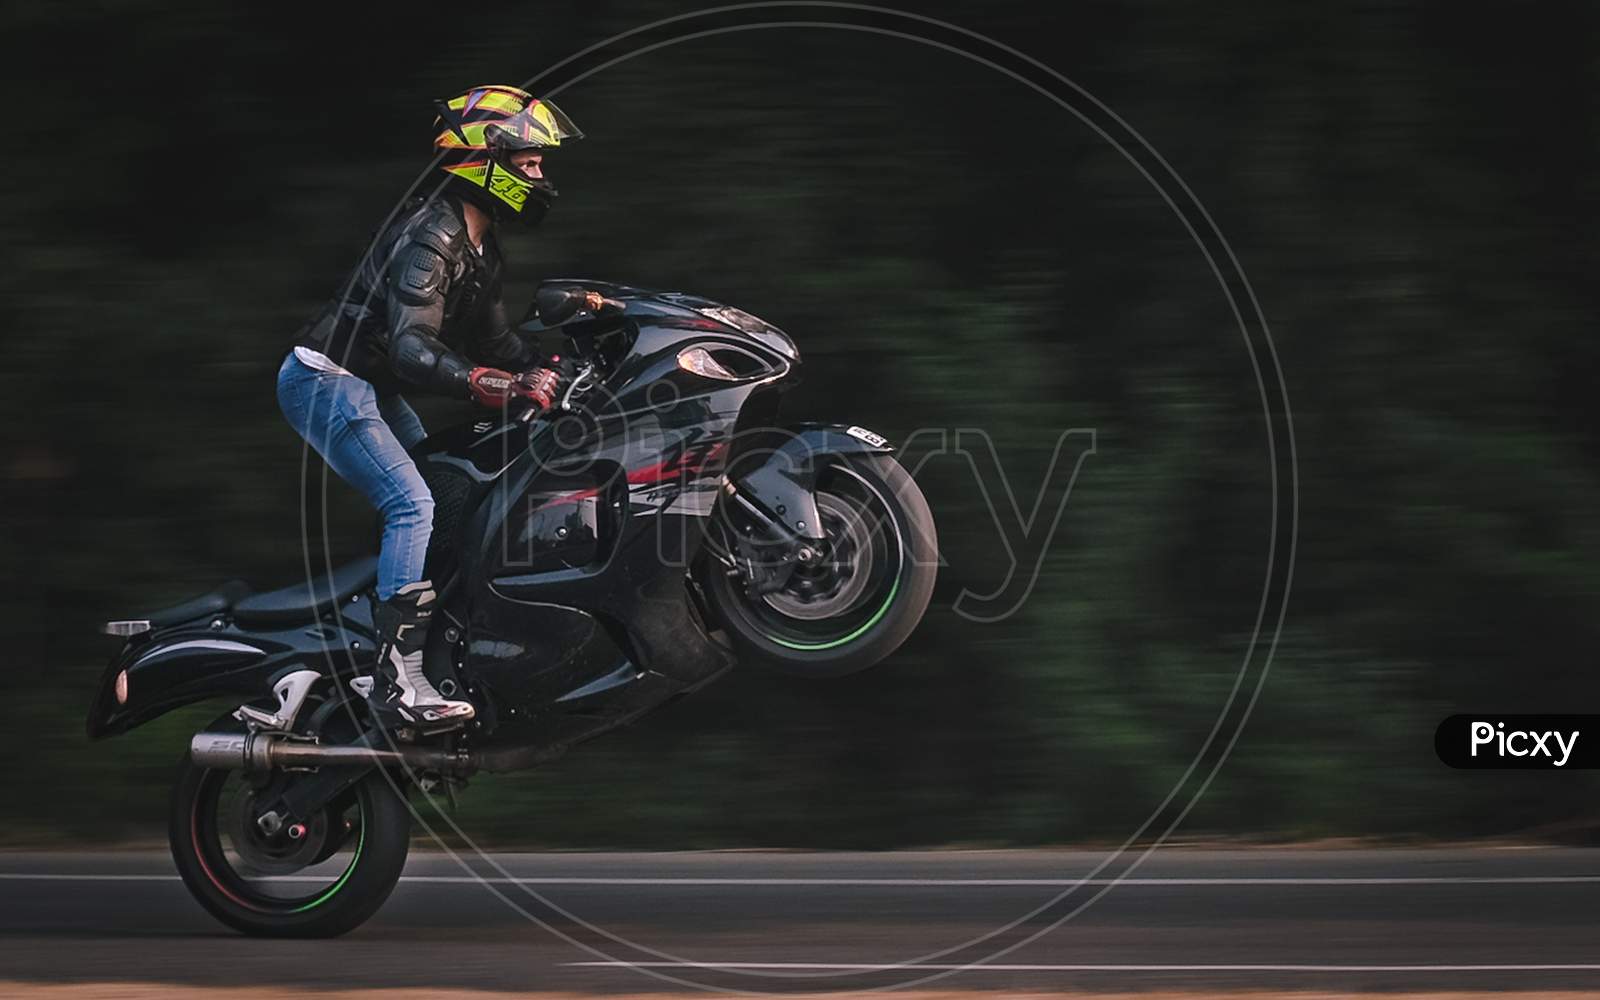 motorcycle rider doing wheelie on a Superbike